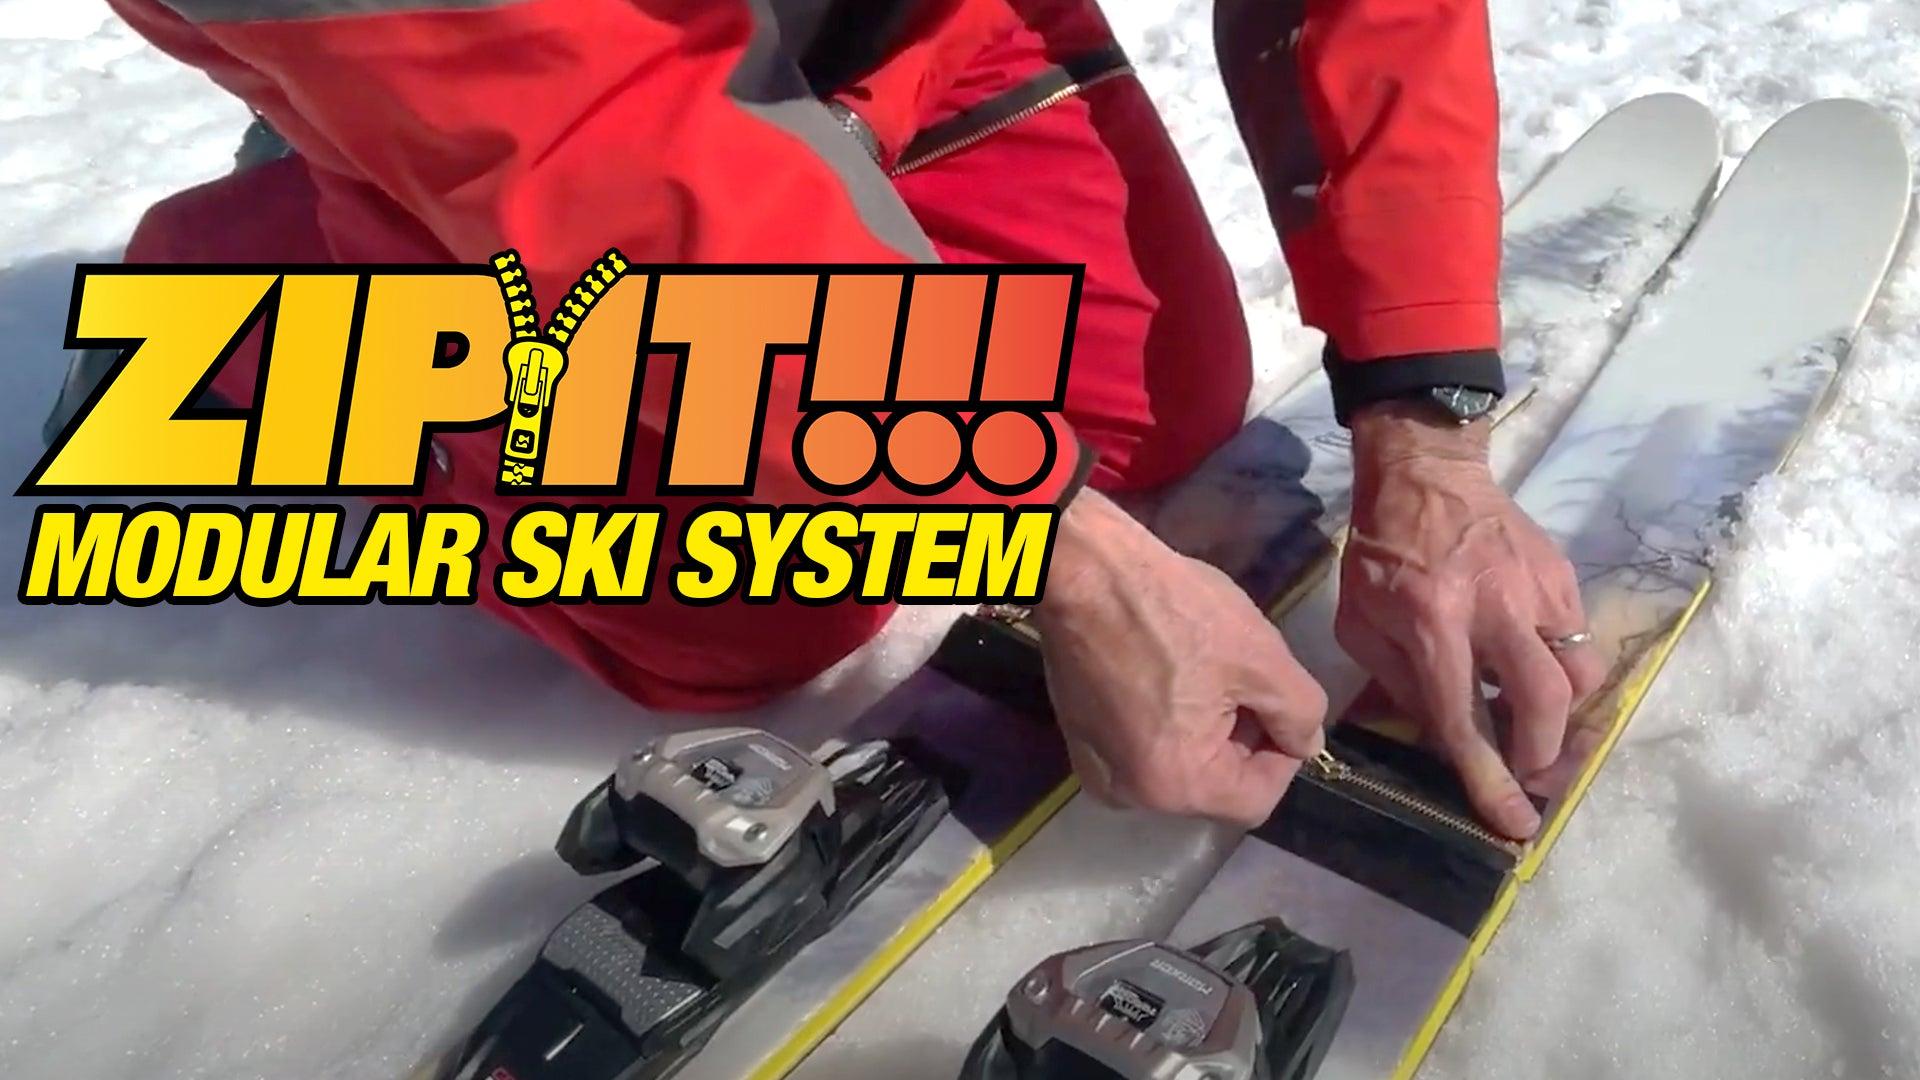 ZIPIT!!! World's first zipper skis Video Image